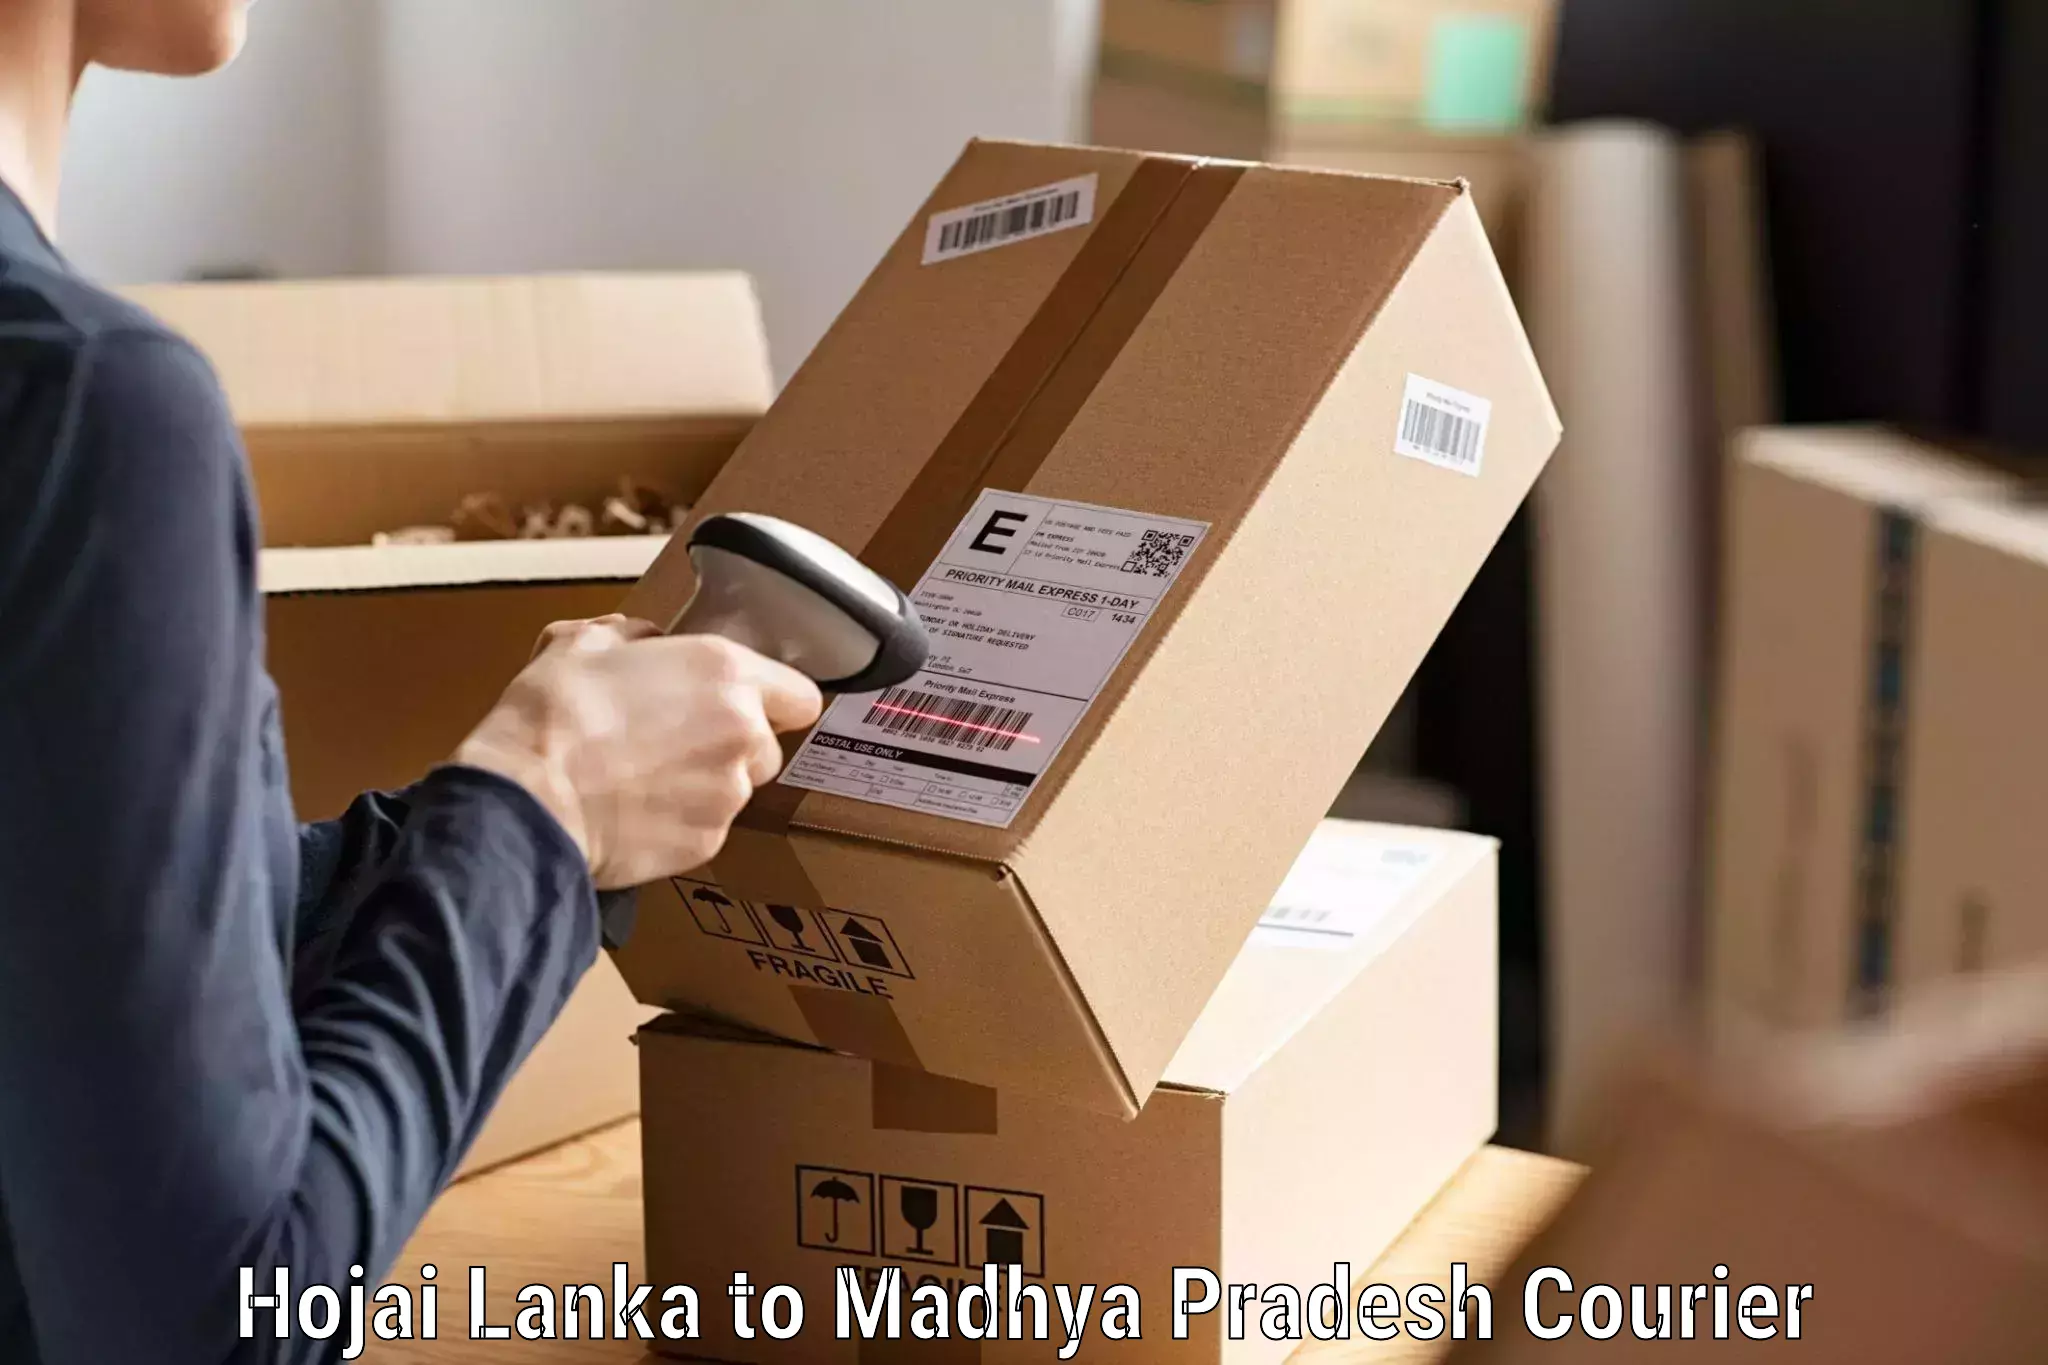 Personal courier services Hojai Lanka to Chitrangi